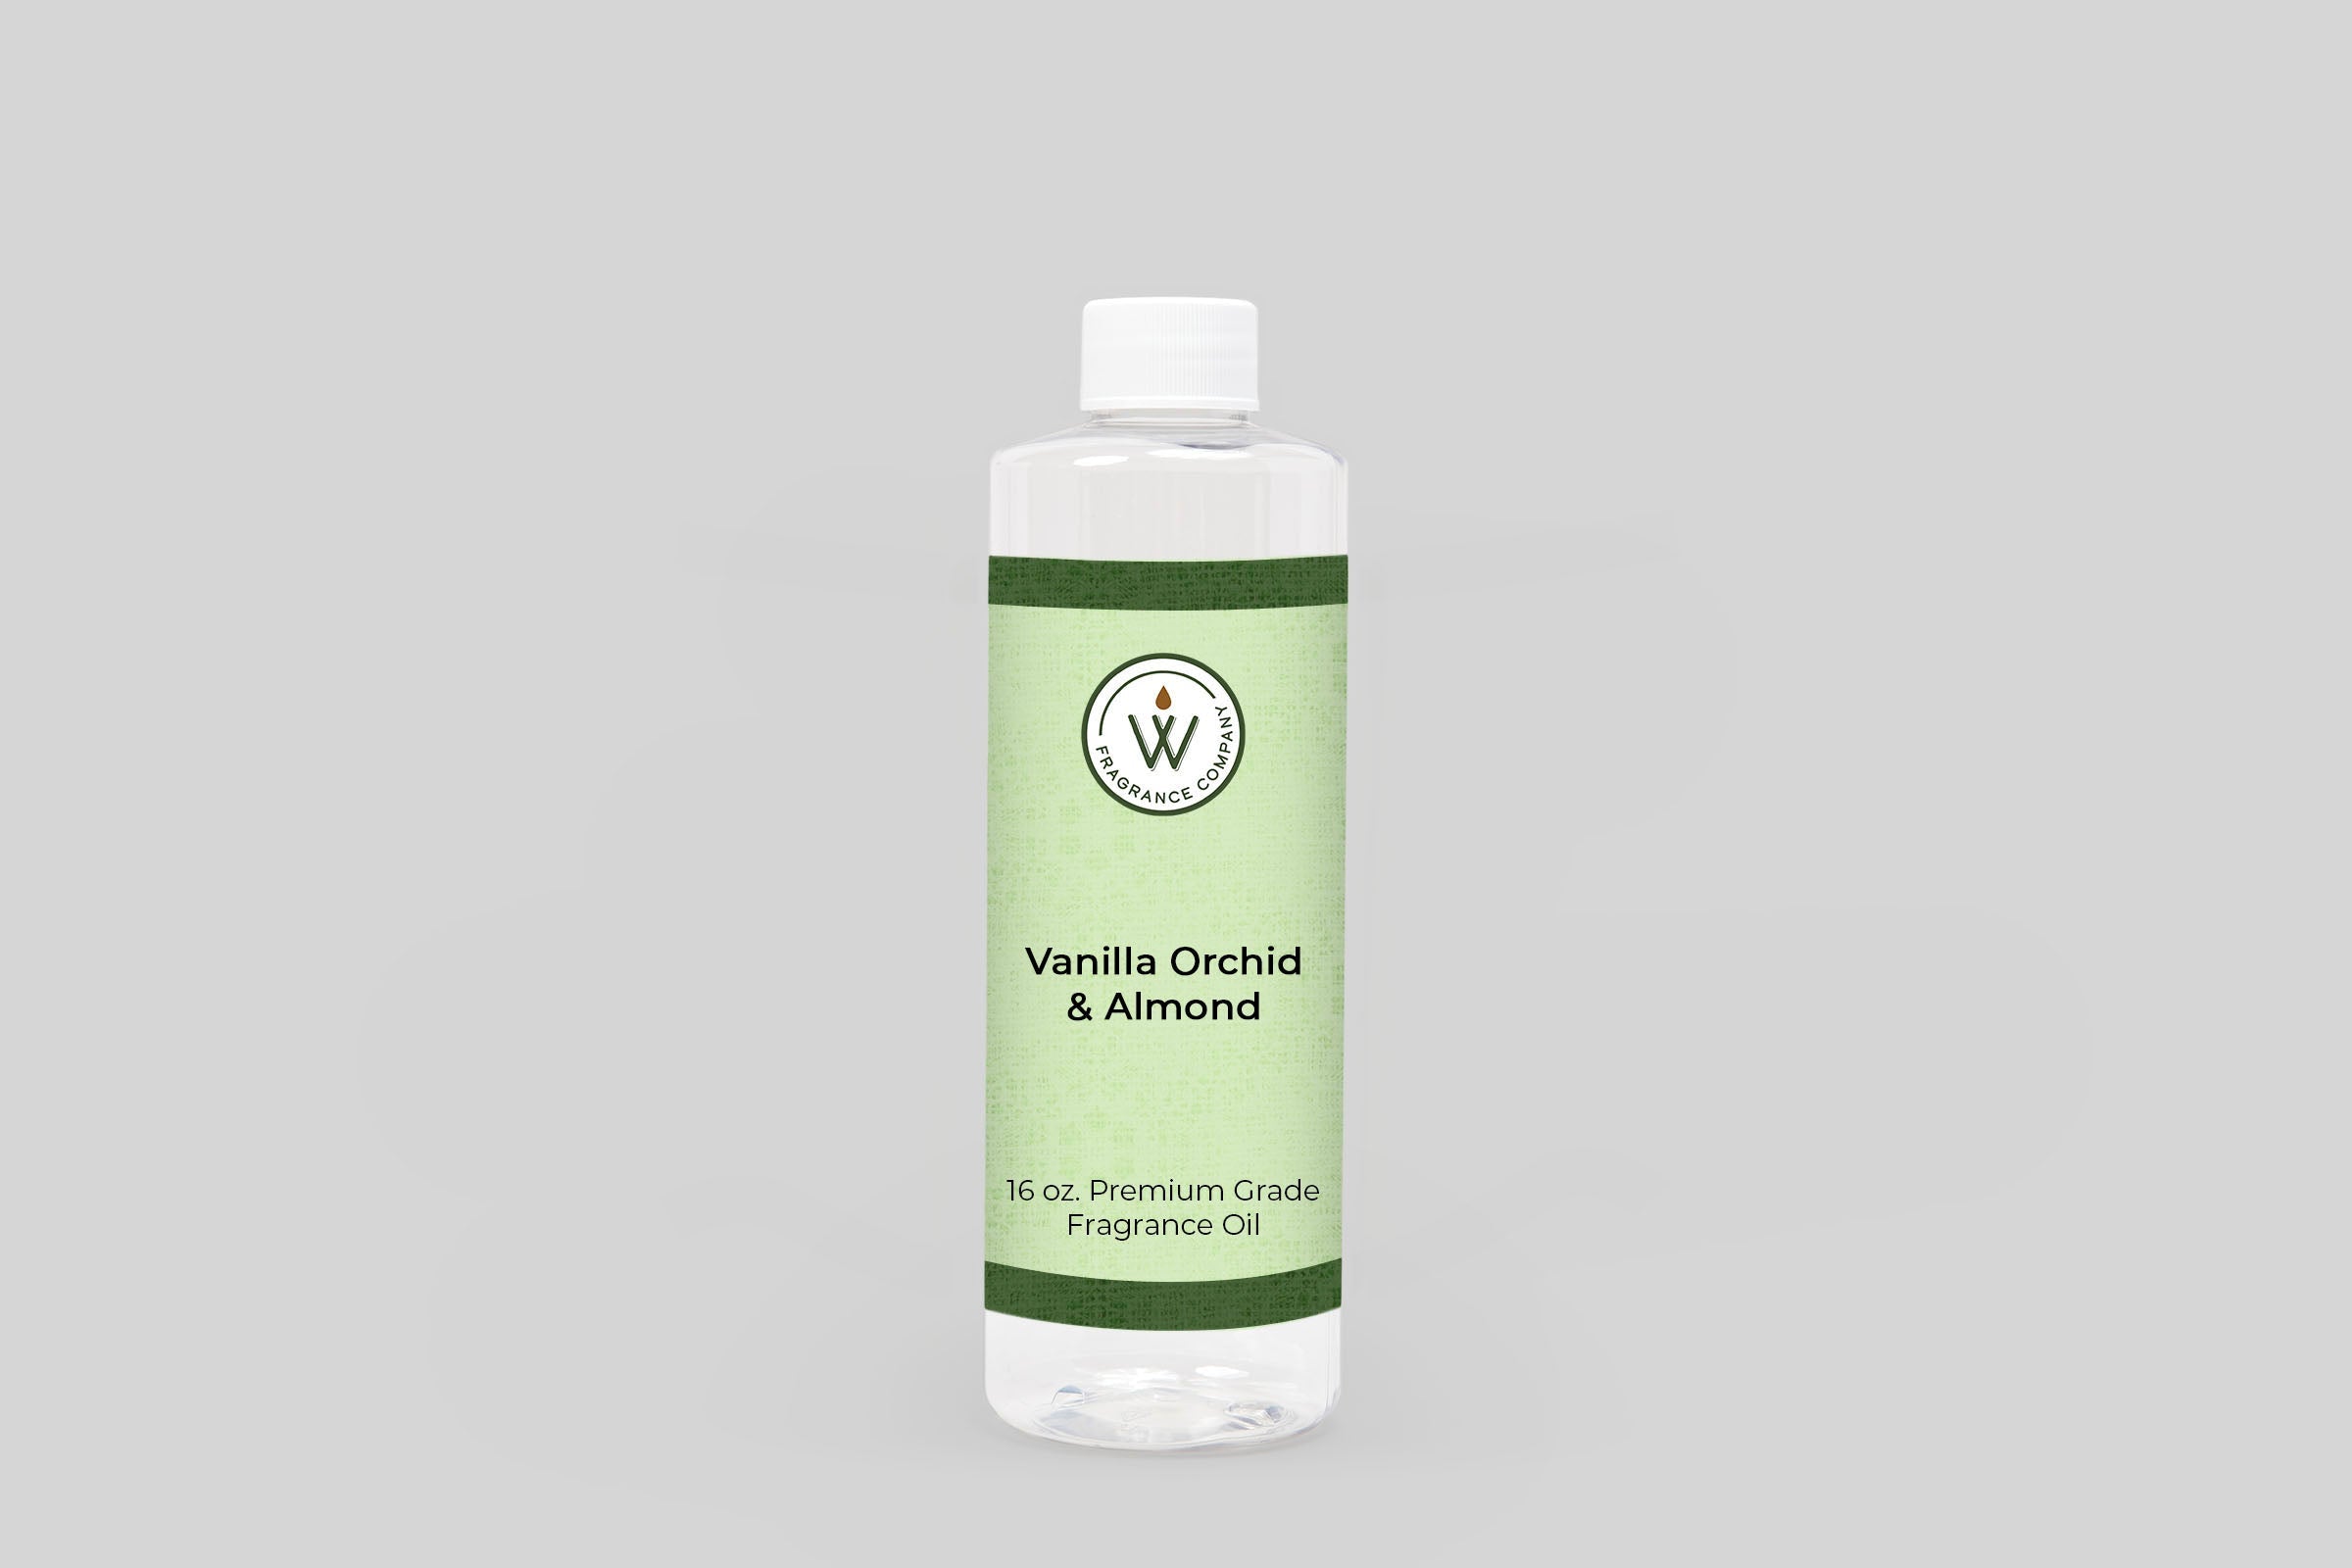 Vanilla Orchid & Almond Fragrance Oil